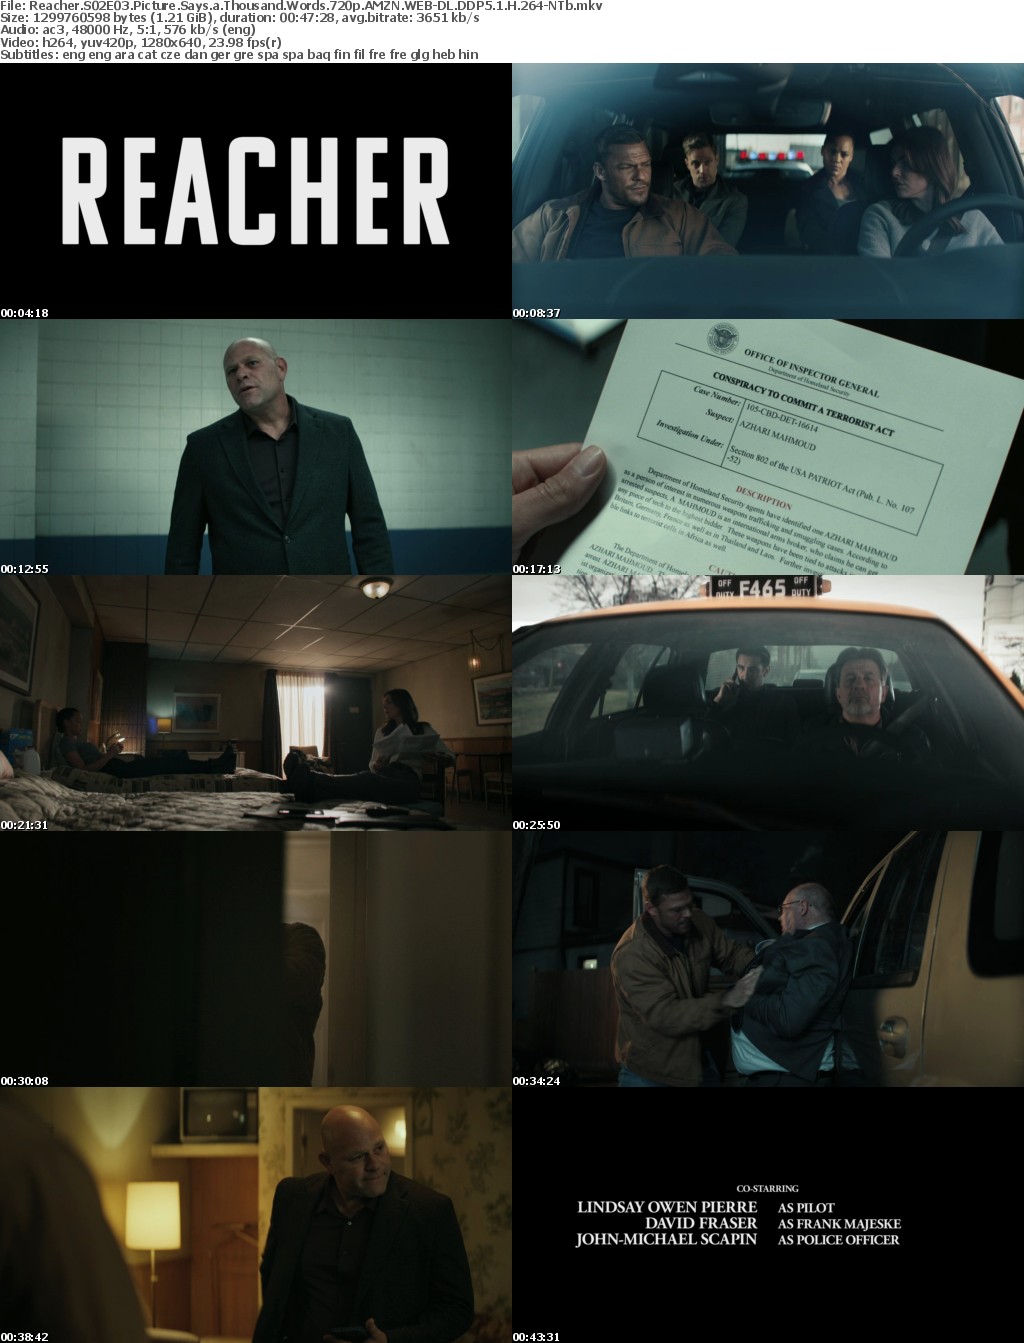 Reacher S02E03 Picture Says a Thousand Words 720p AMZN WEB-DL DDP5 1 H 264-NTb